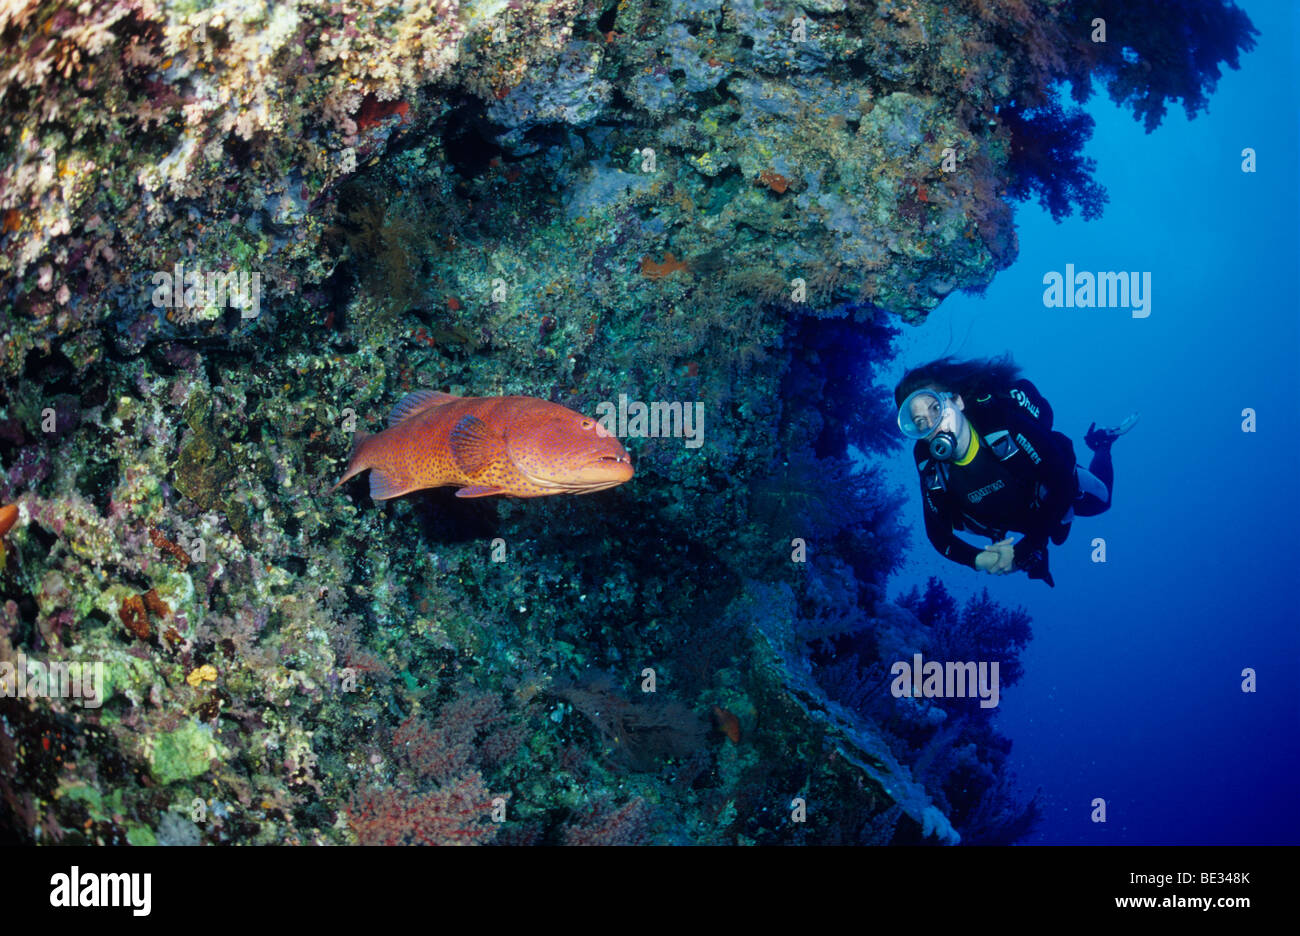 Coral Trout and Scuba Diver, Plectropomus pessuliferus marisrubri, Brother Islands, Red Sea, Egypt Stock Photo